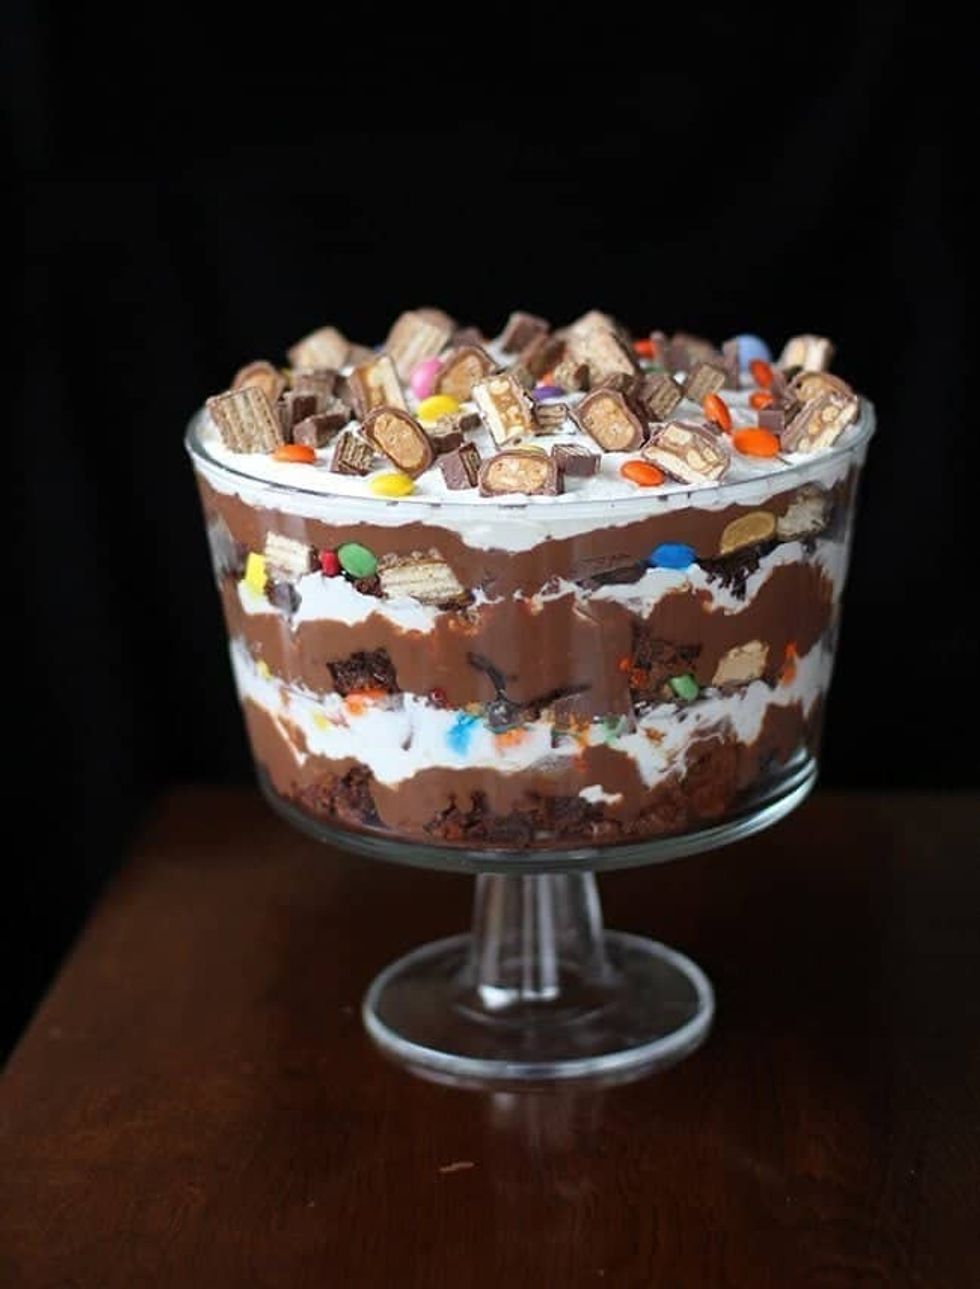 Candy Bar Brownie Trifle